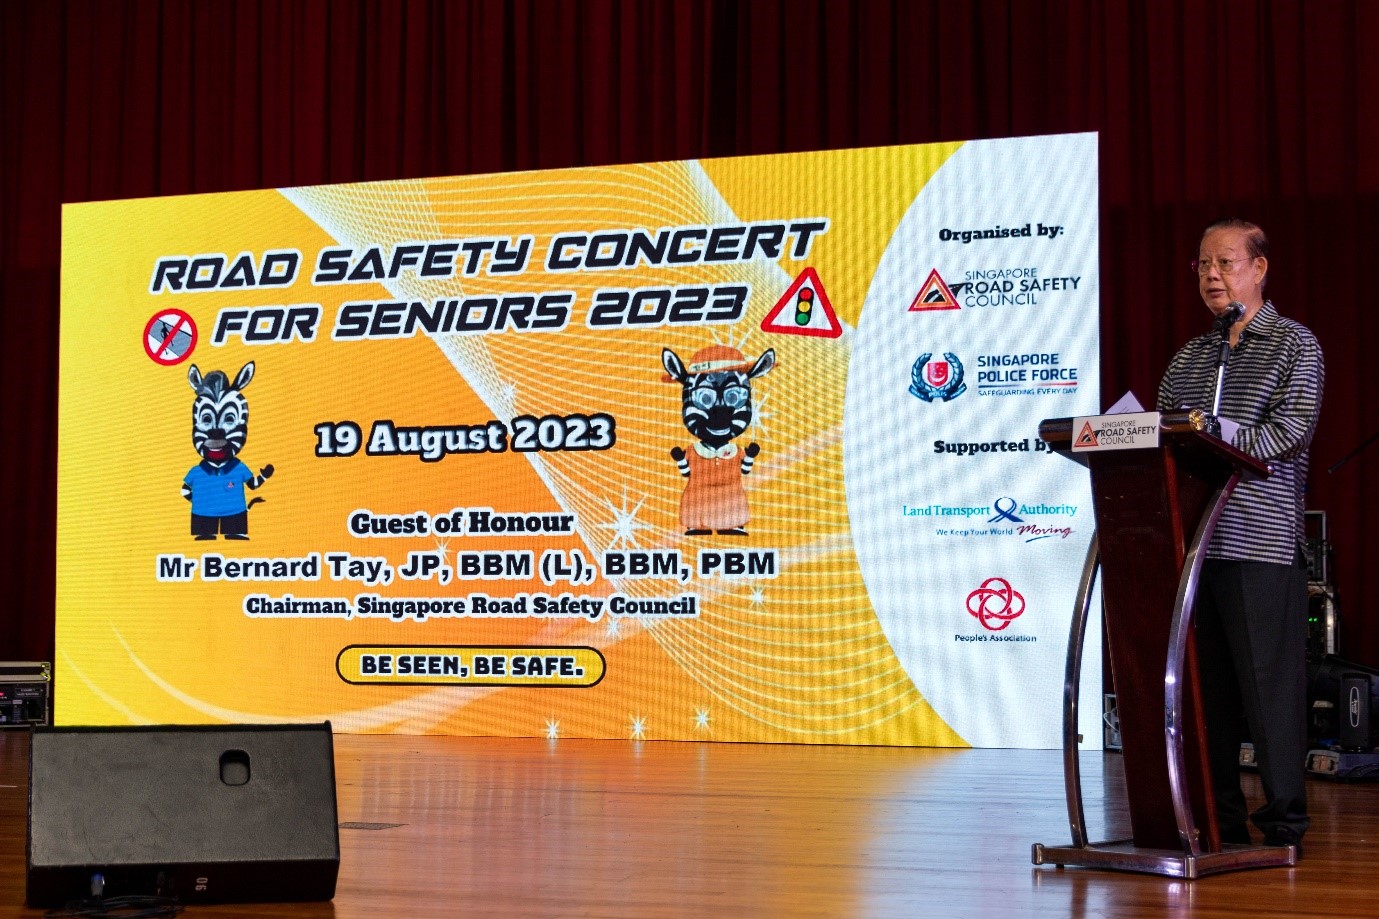 20230819_road_safety_concert_for_seniors_2023_1